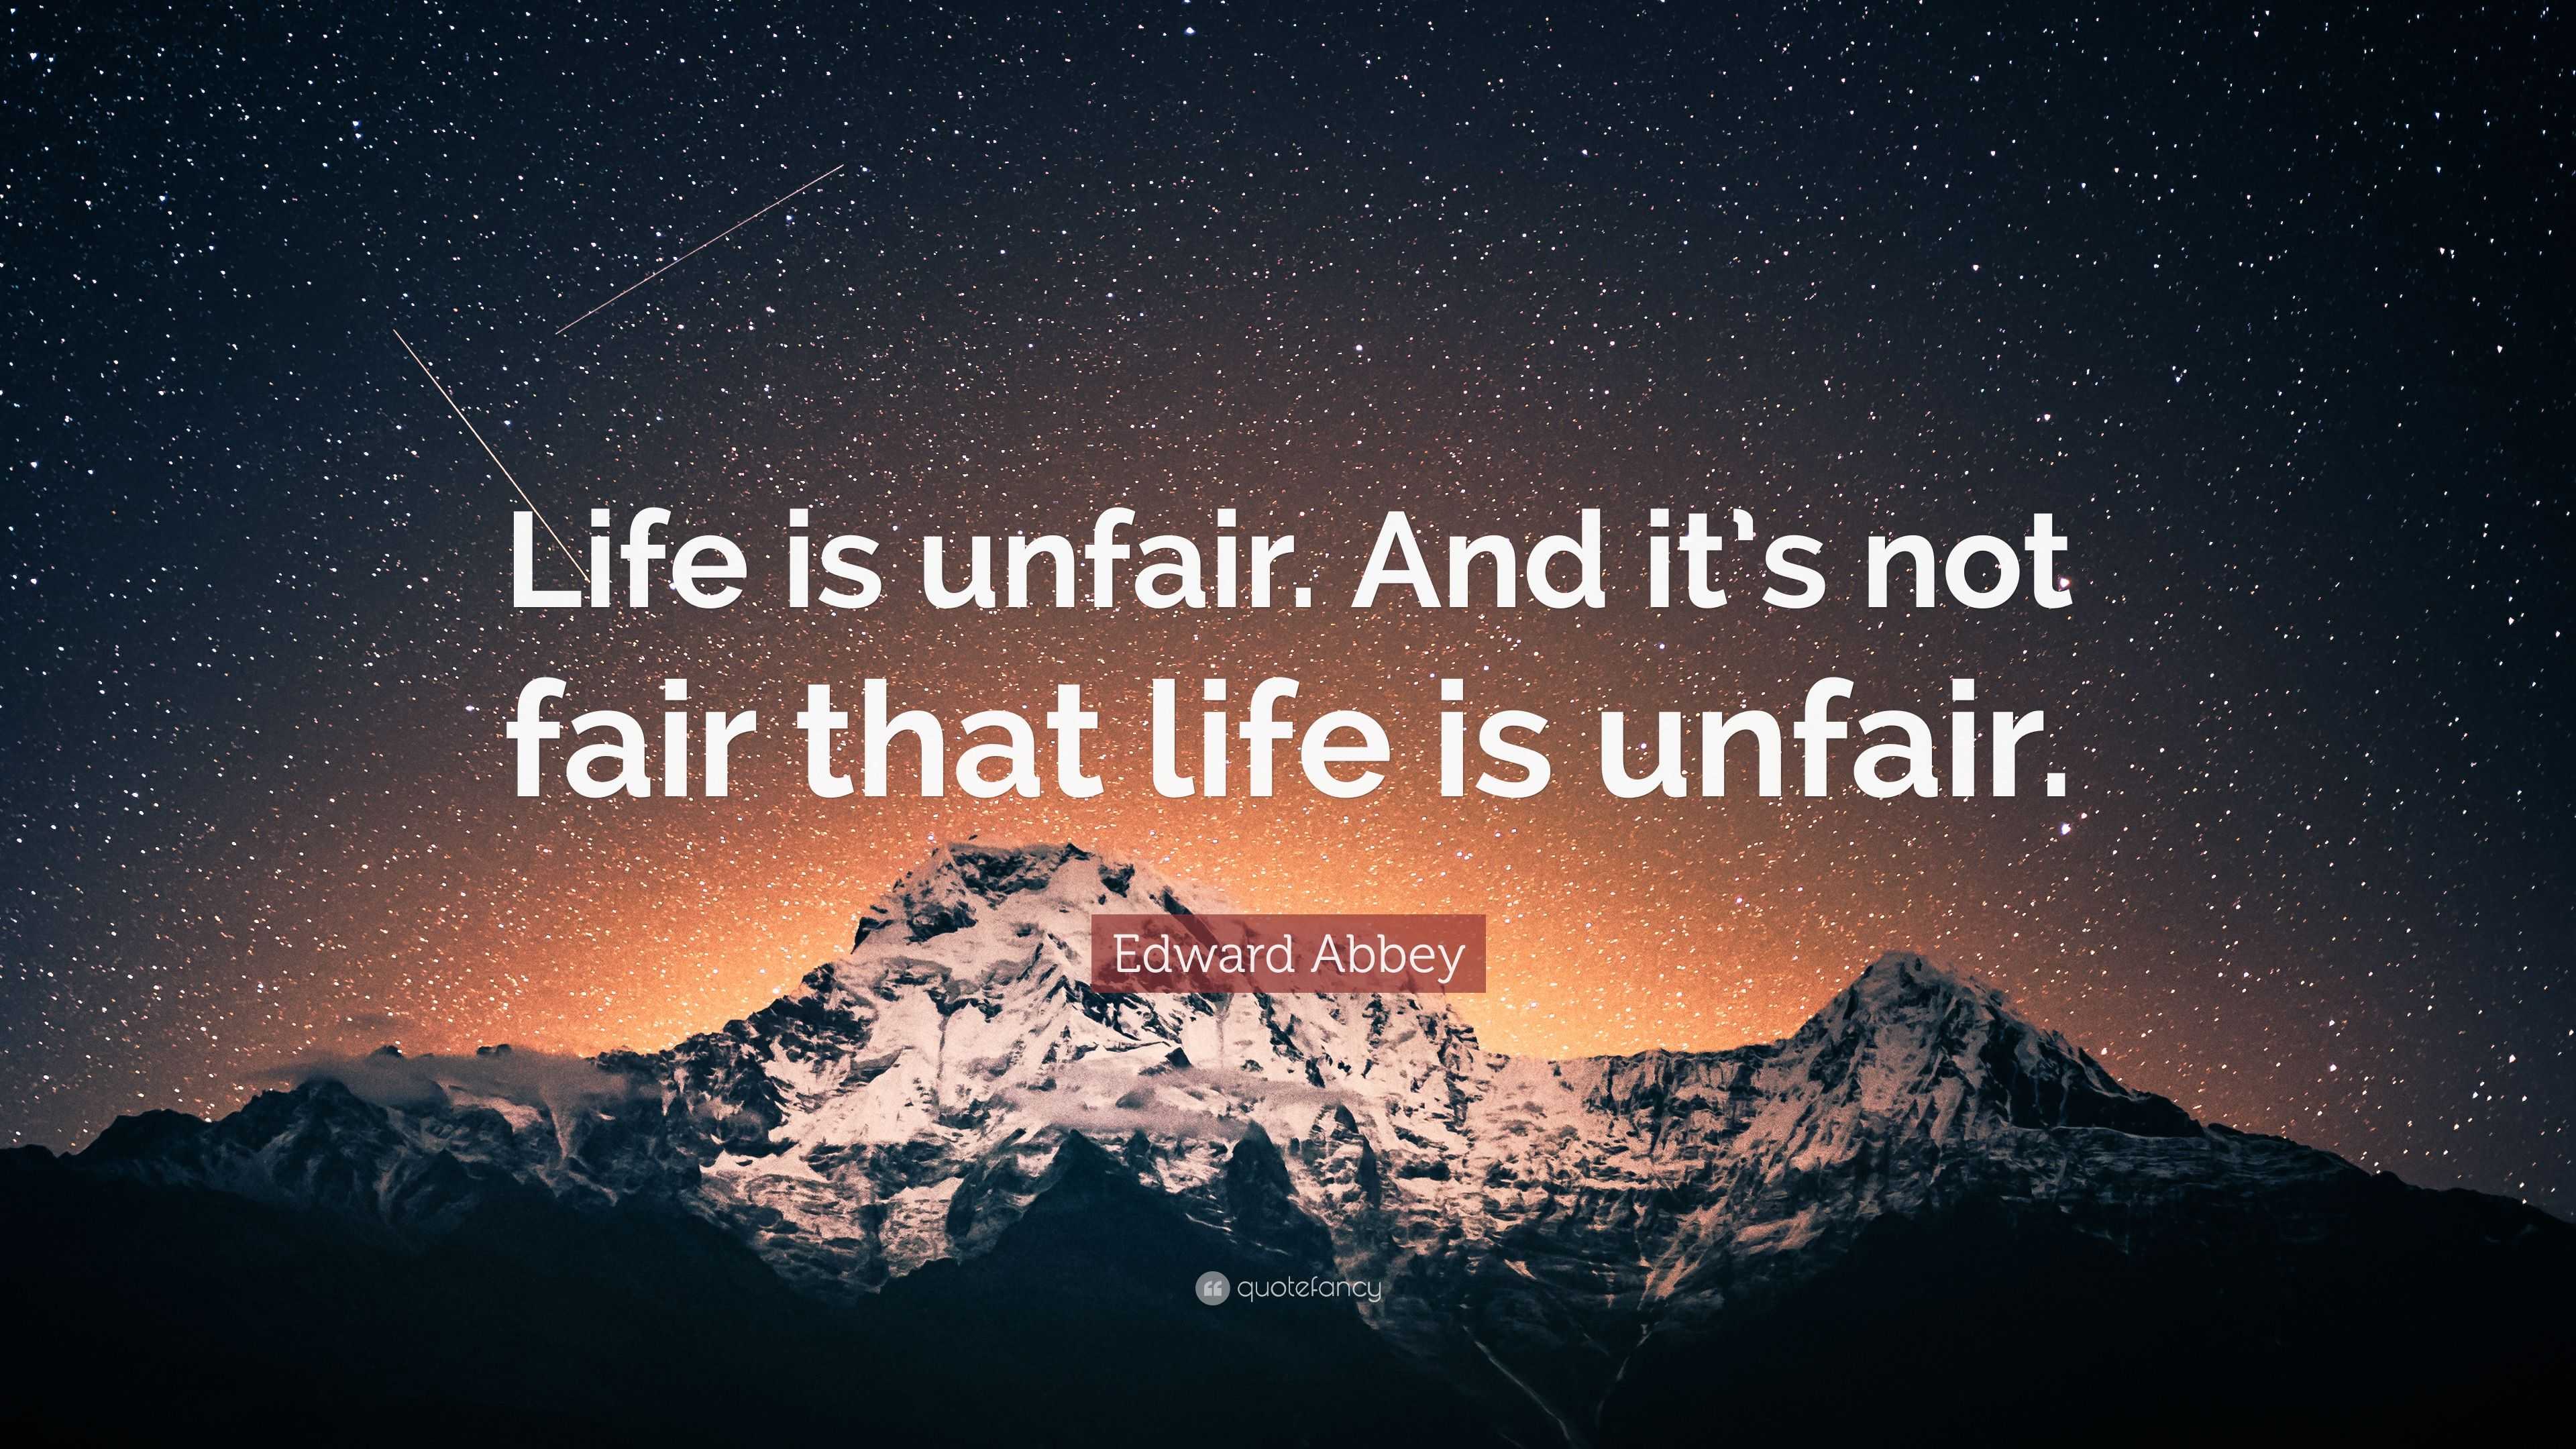 life is not unfair essay